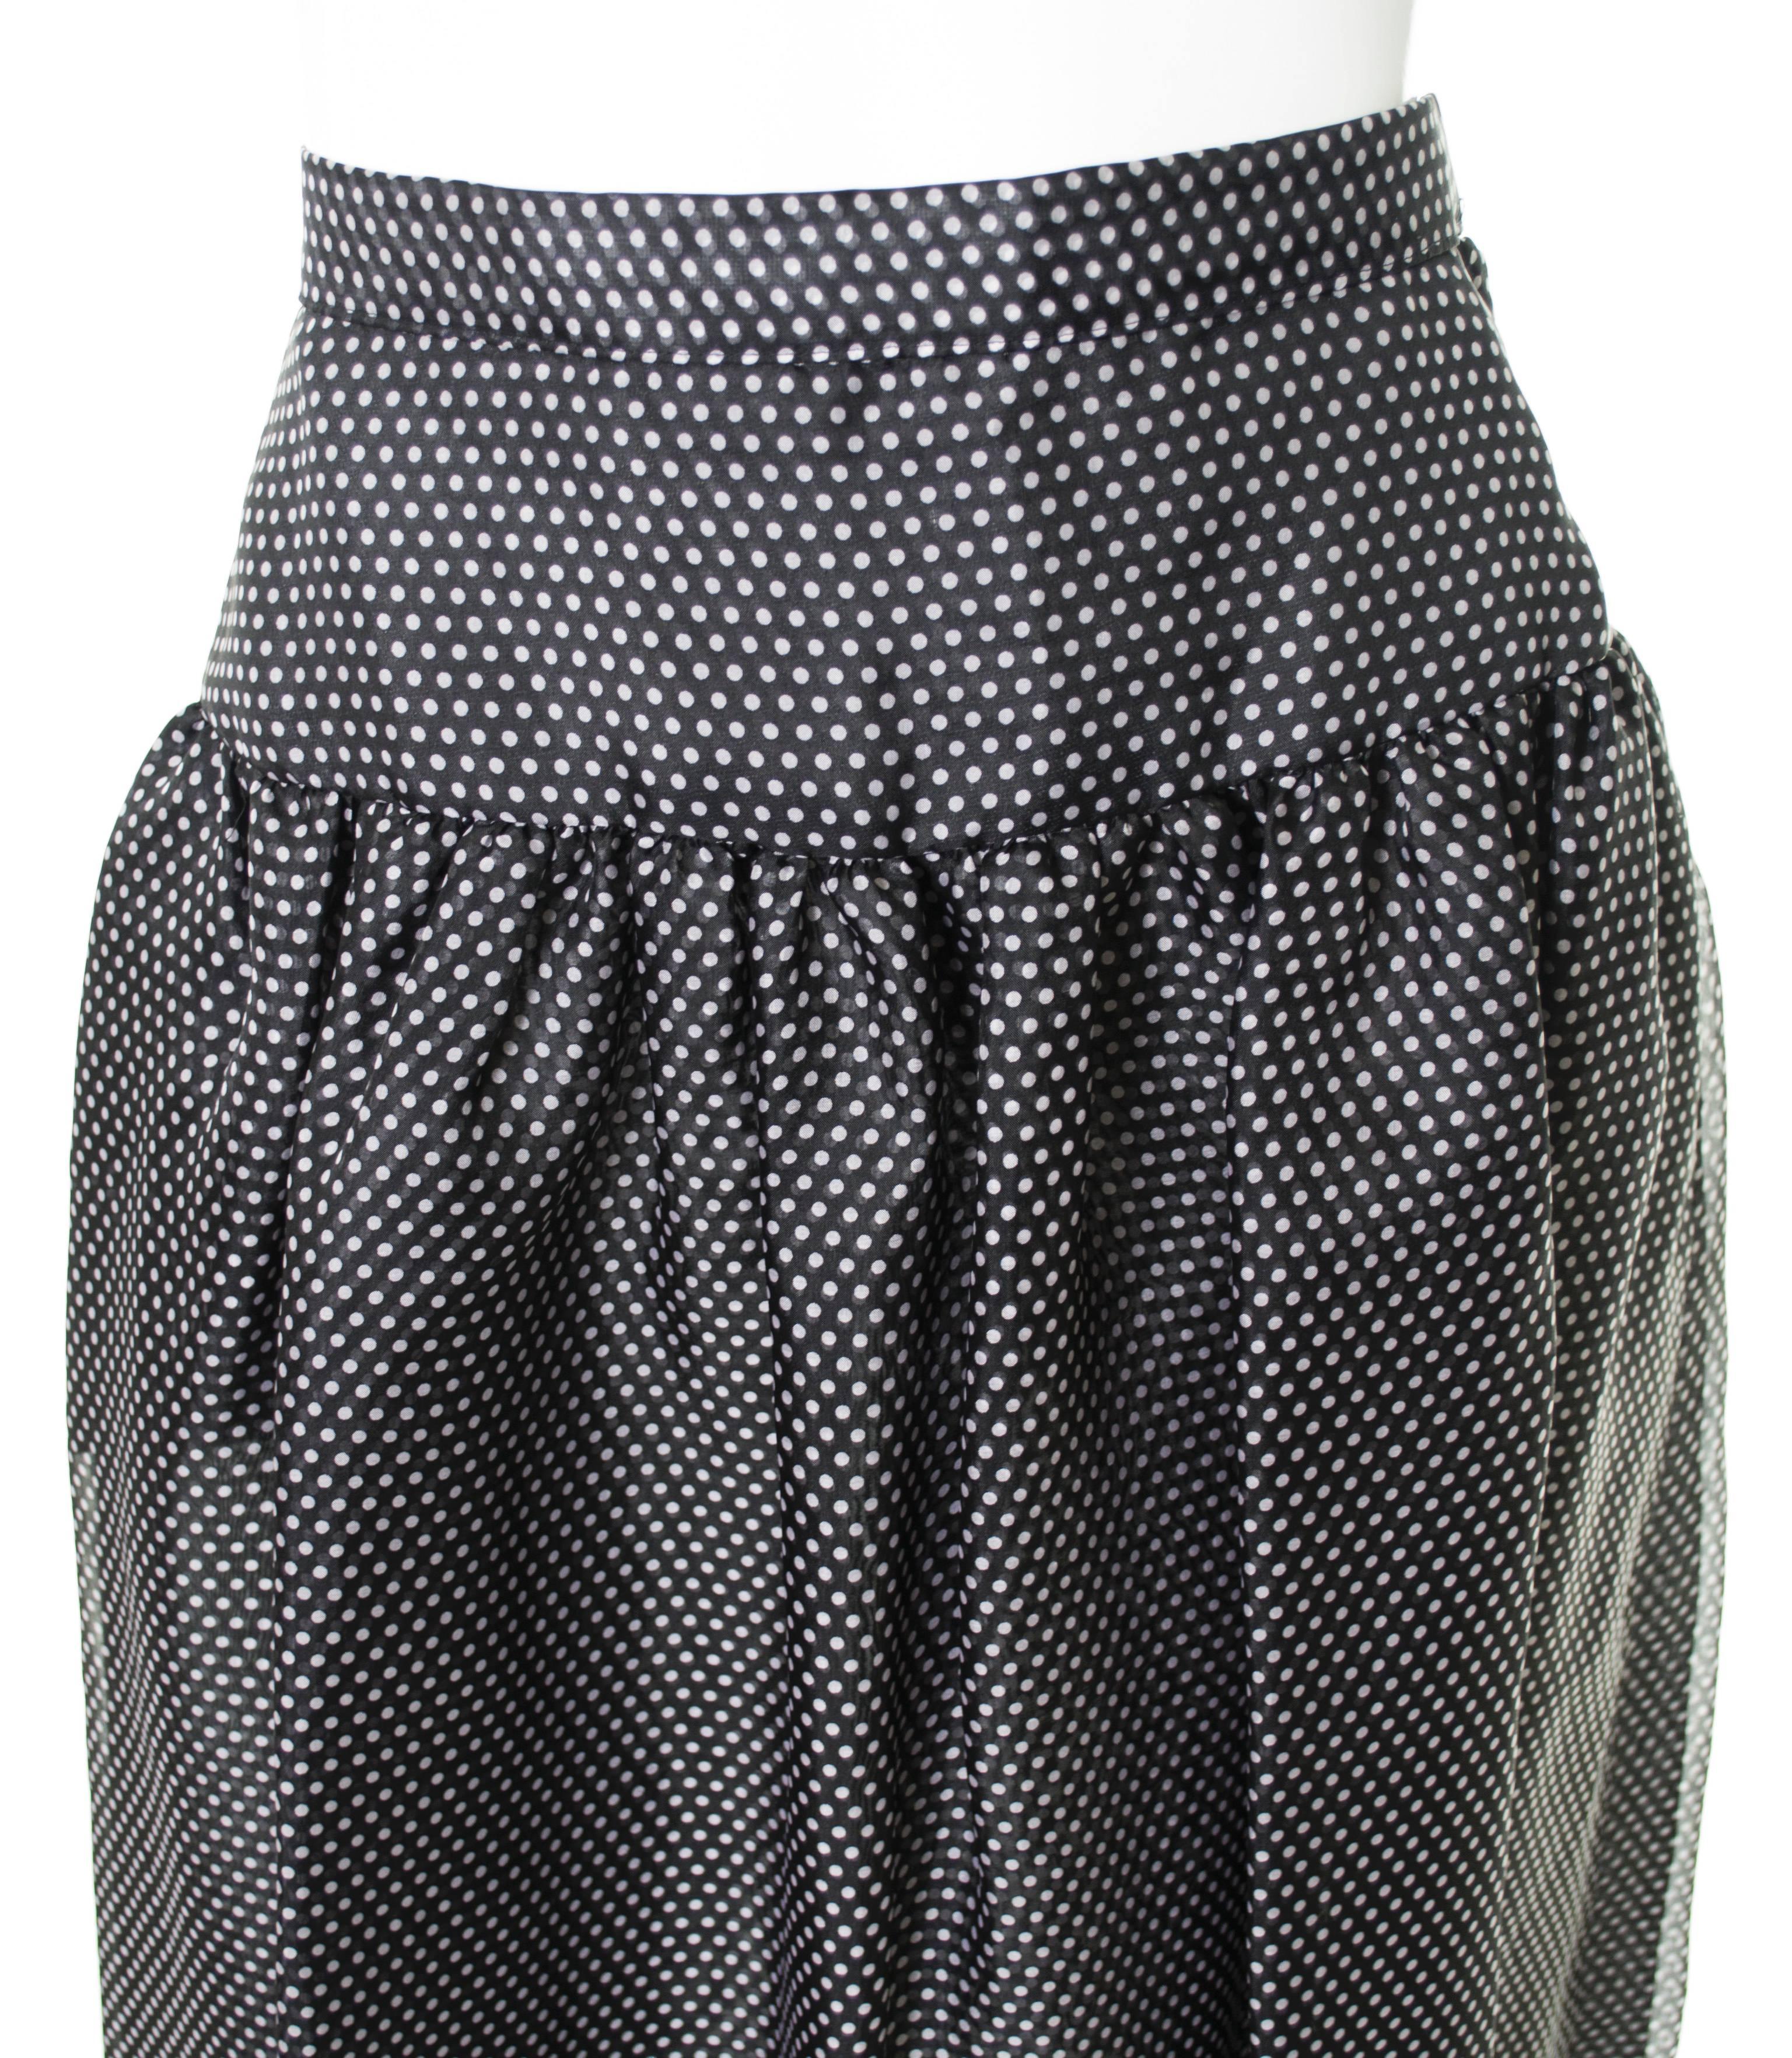 Black Oscar de la Renta Vintage Silk Polka Dot Skirt New With Tags Deadstock 6/8